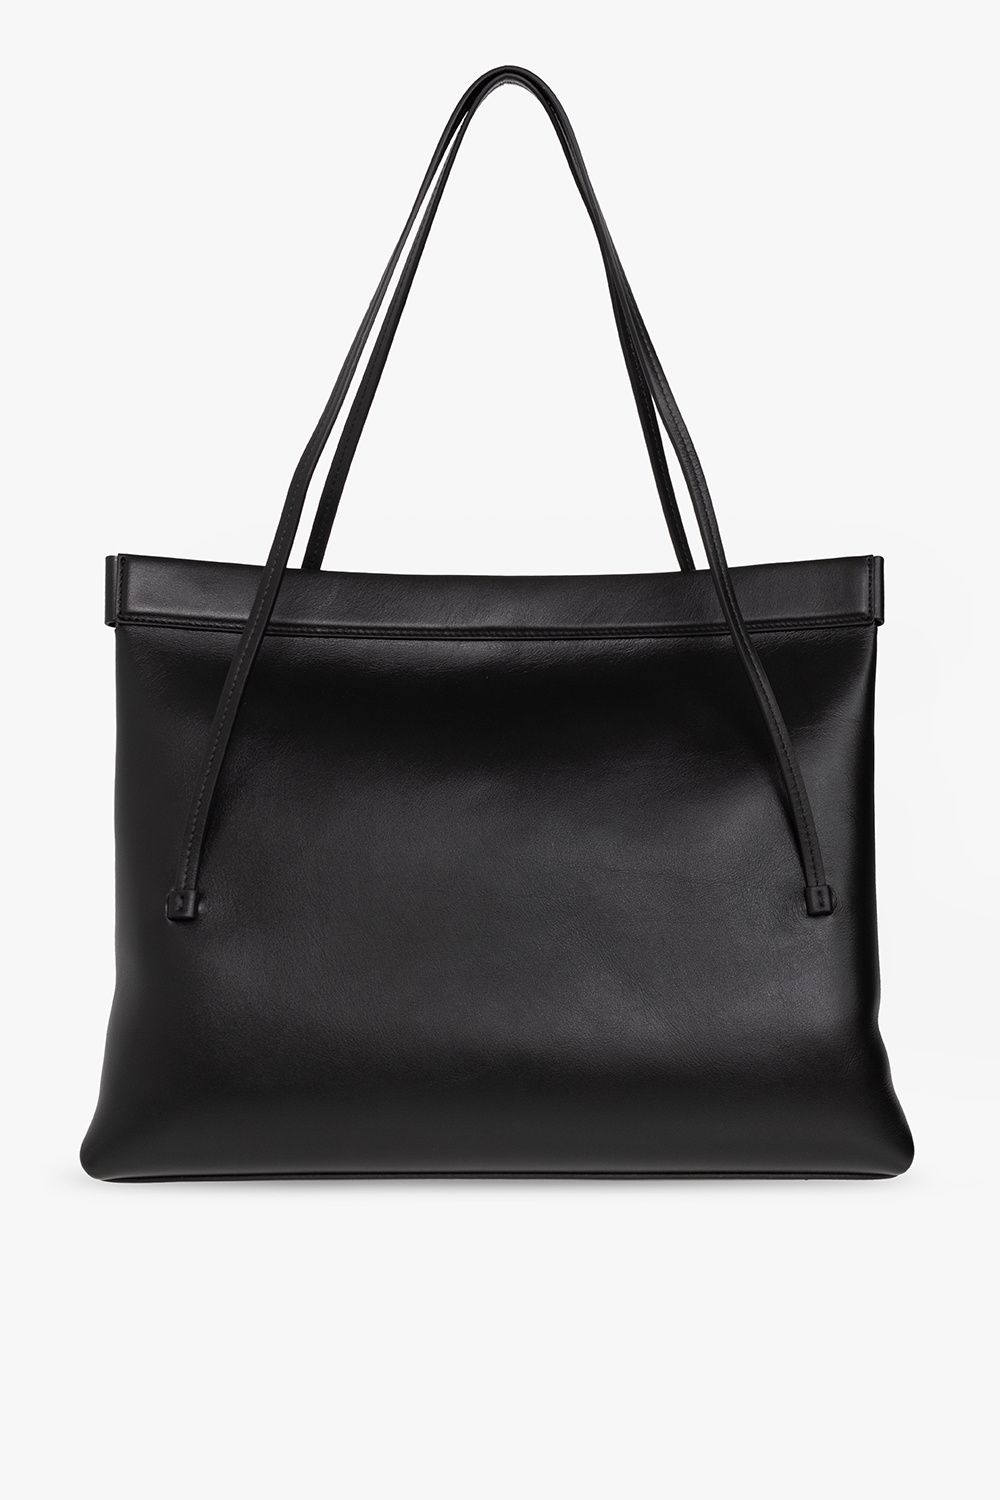 Wandler ‘Joanna Medium’ shoulder bag